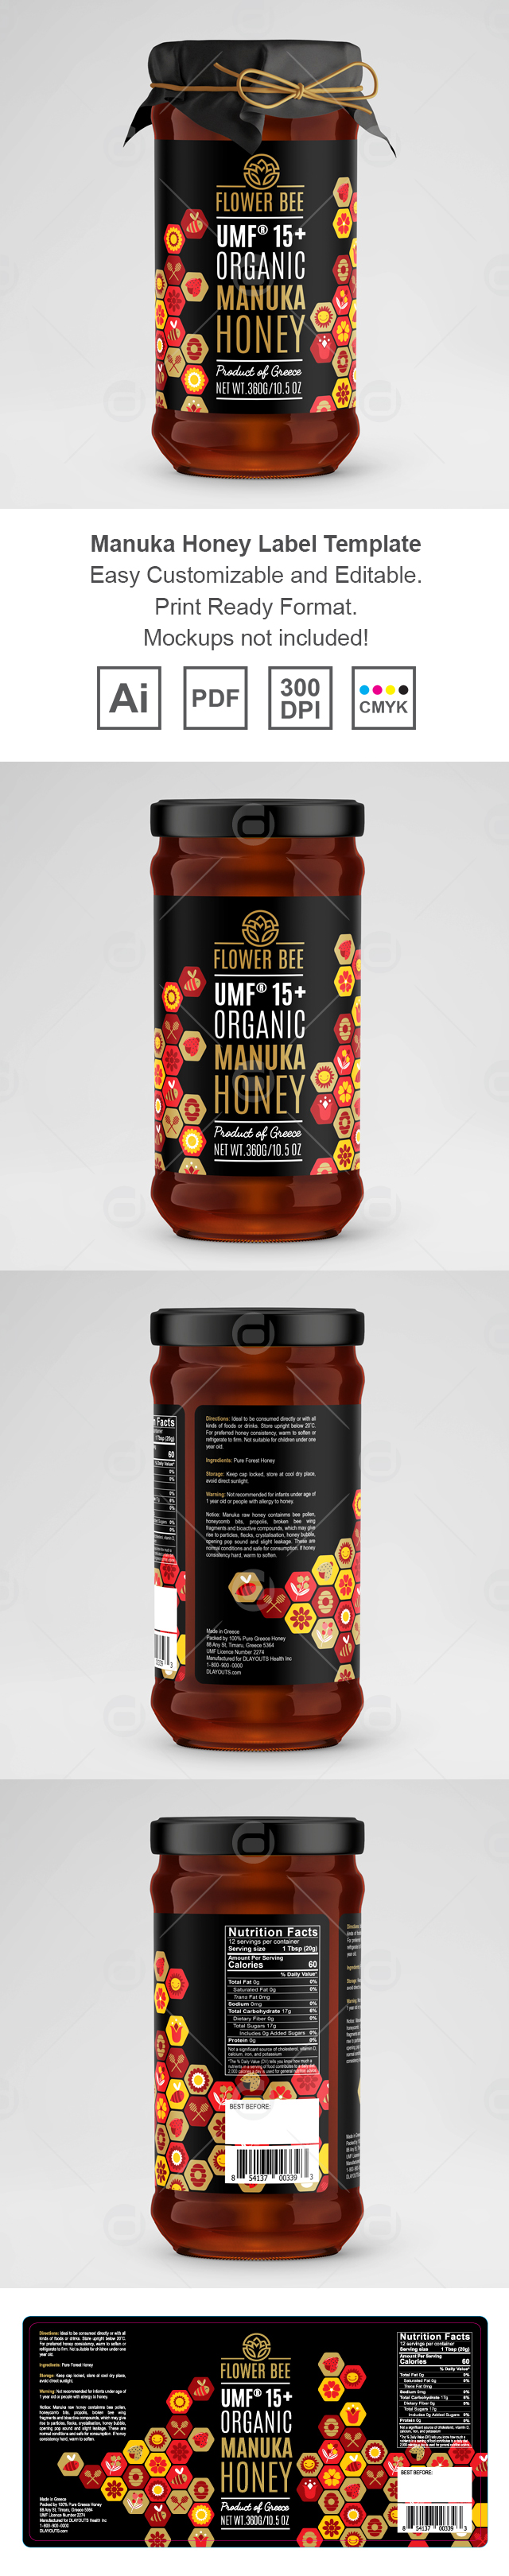 Manuka Honey Labels Template